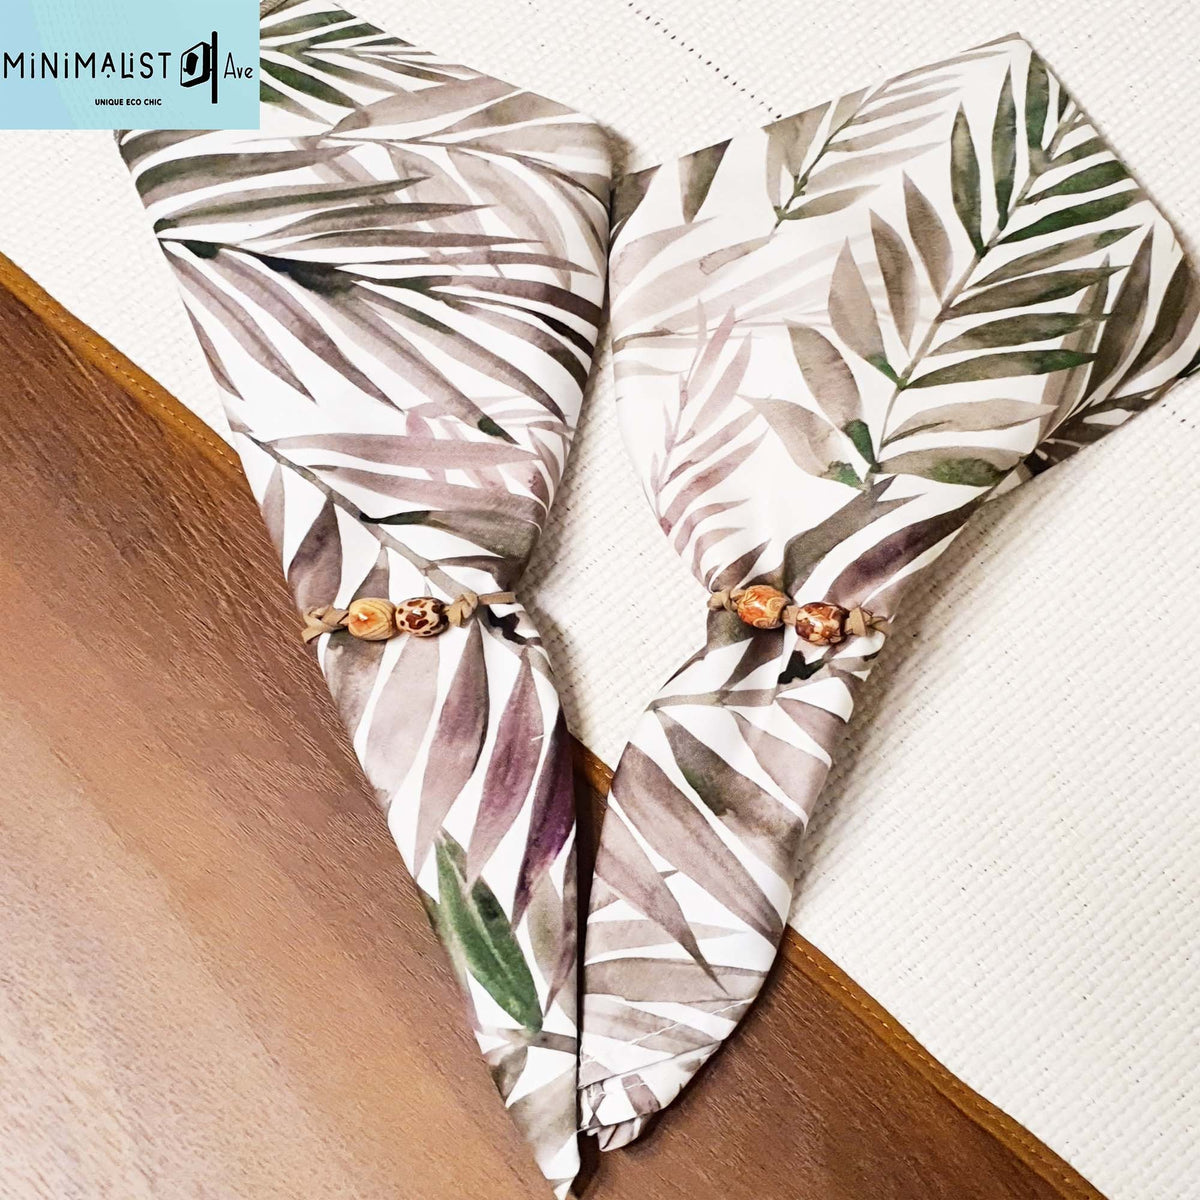 cloth napkins, nature print, bamboo print, with napkin holders